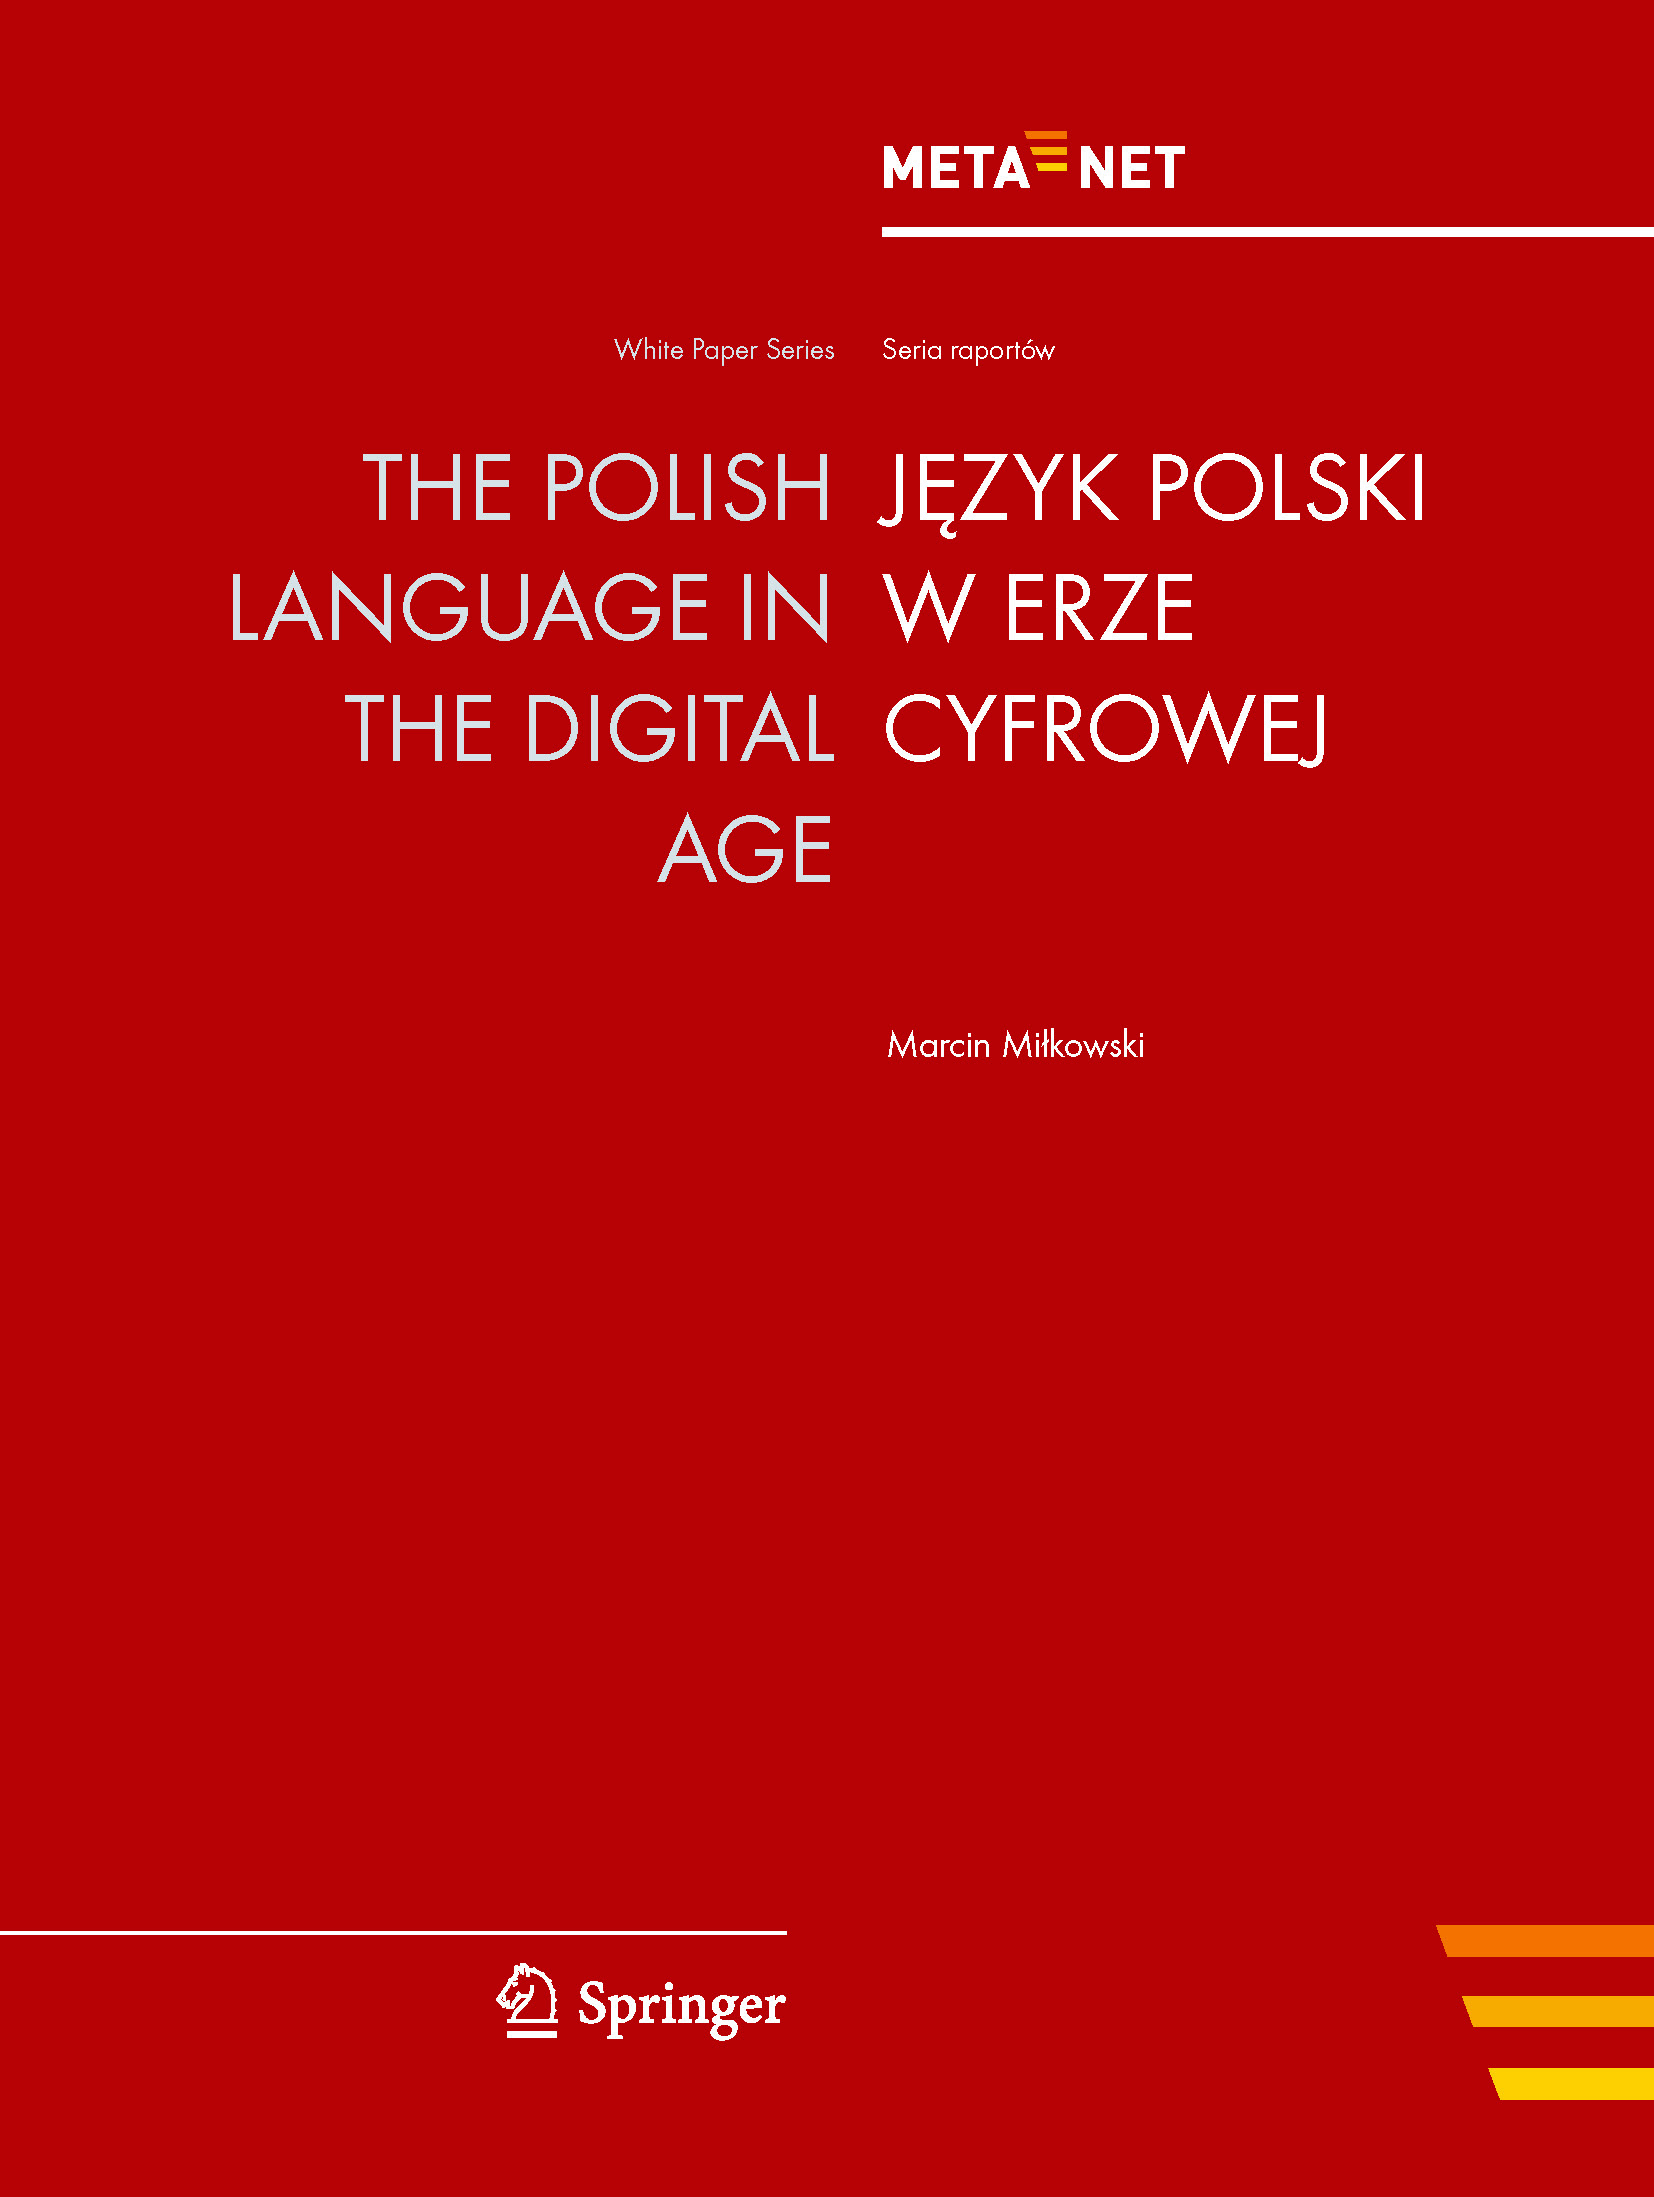 Cover of Polish whitepaper